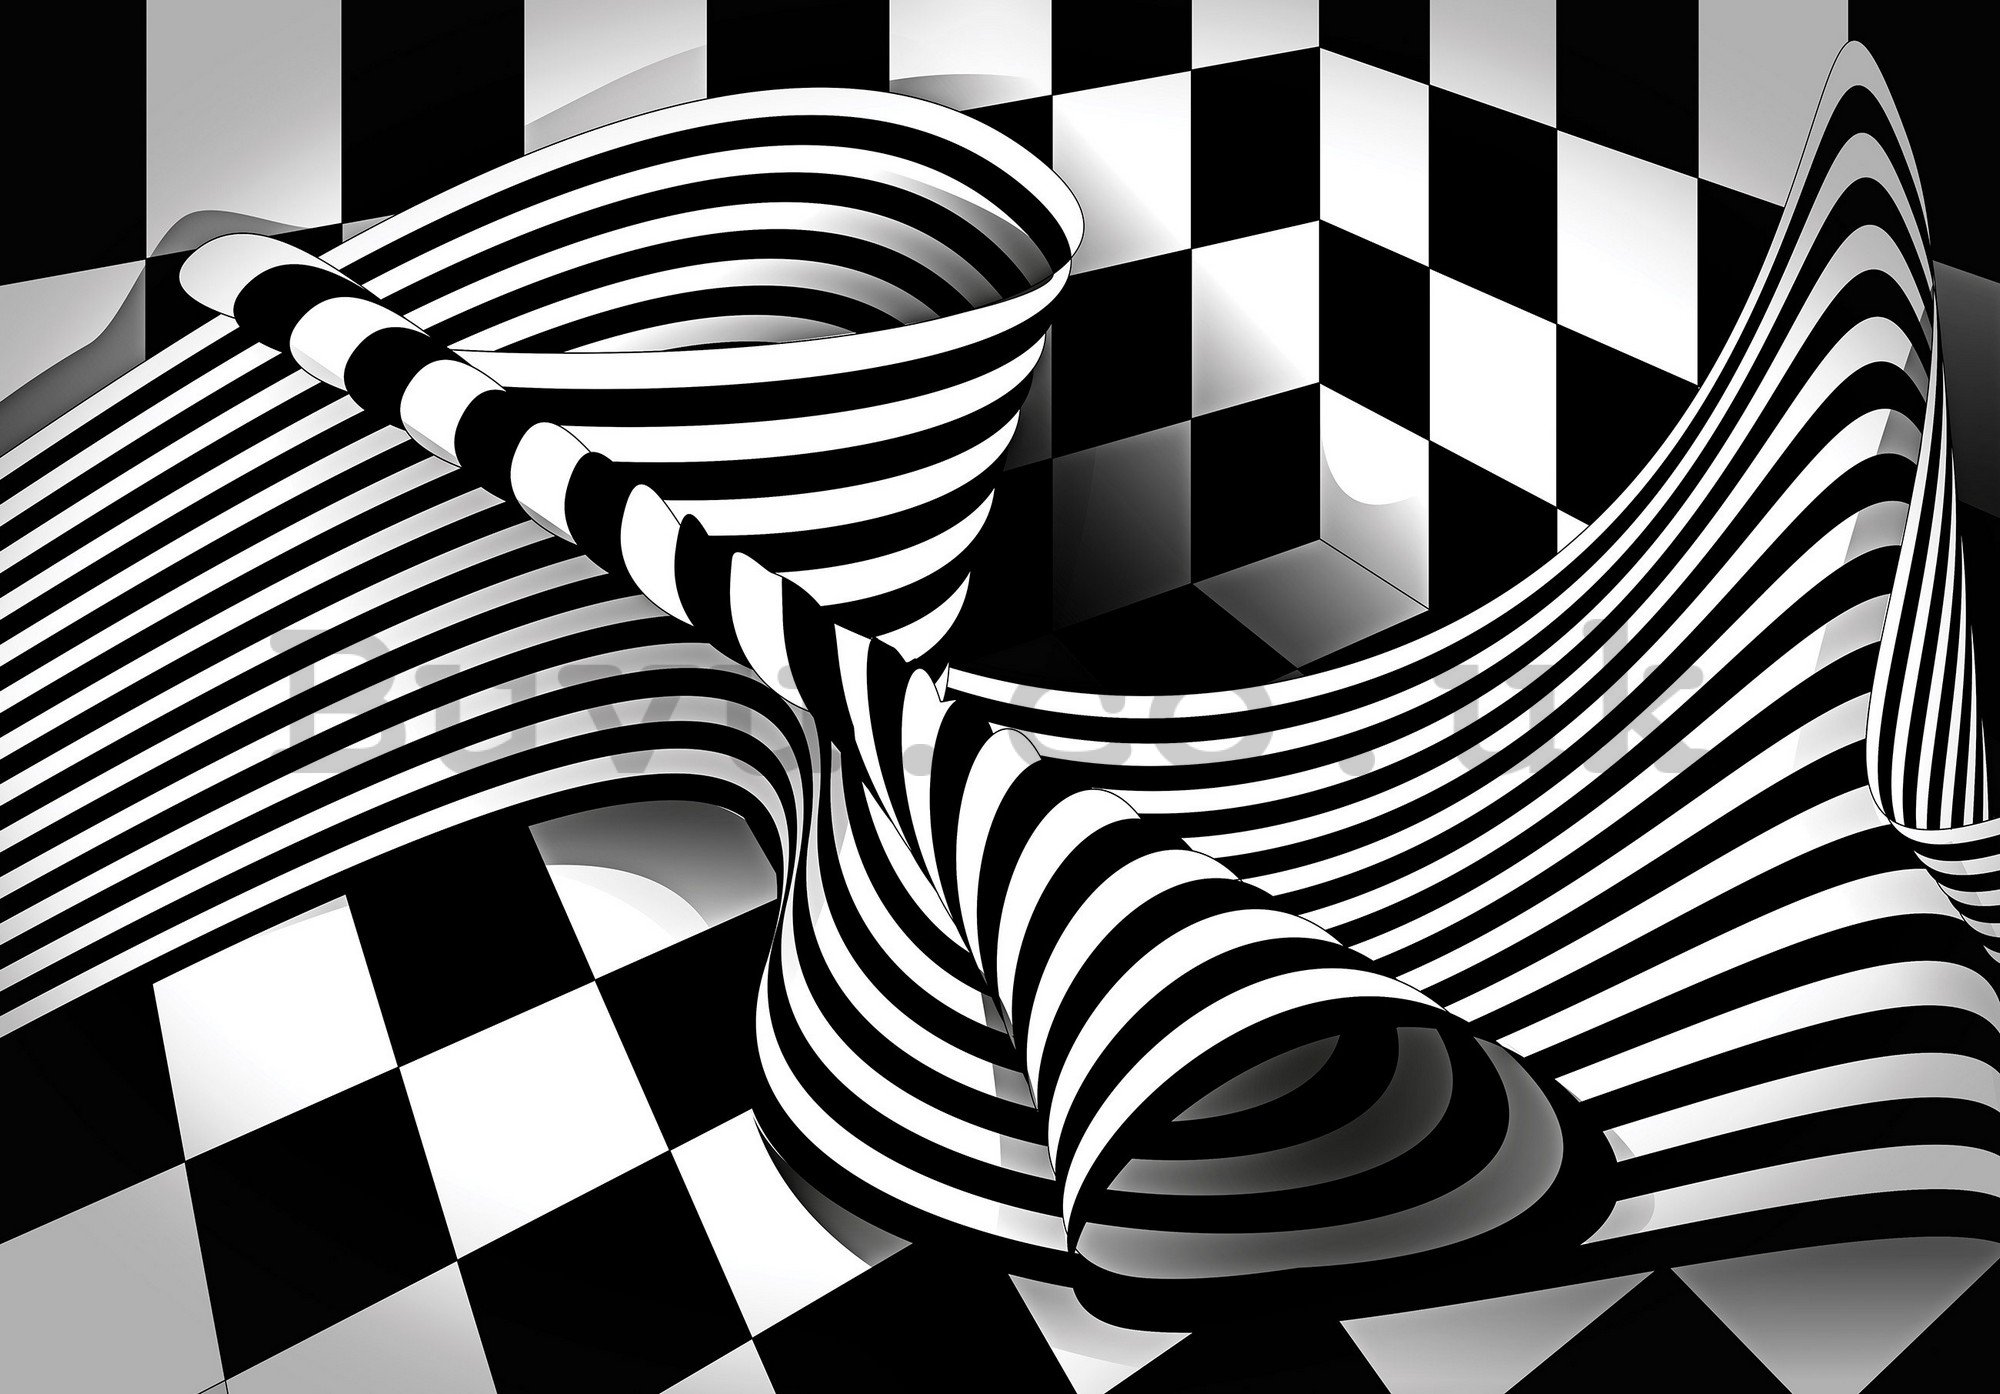 Wall mural vlies: Black and white illusion - 254x184 cm